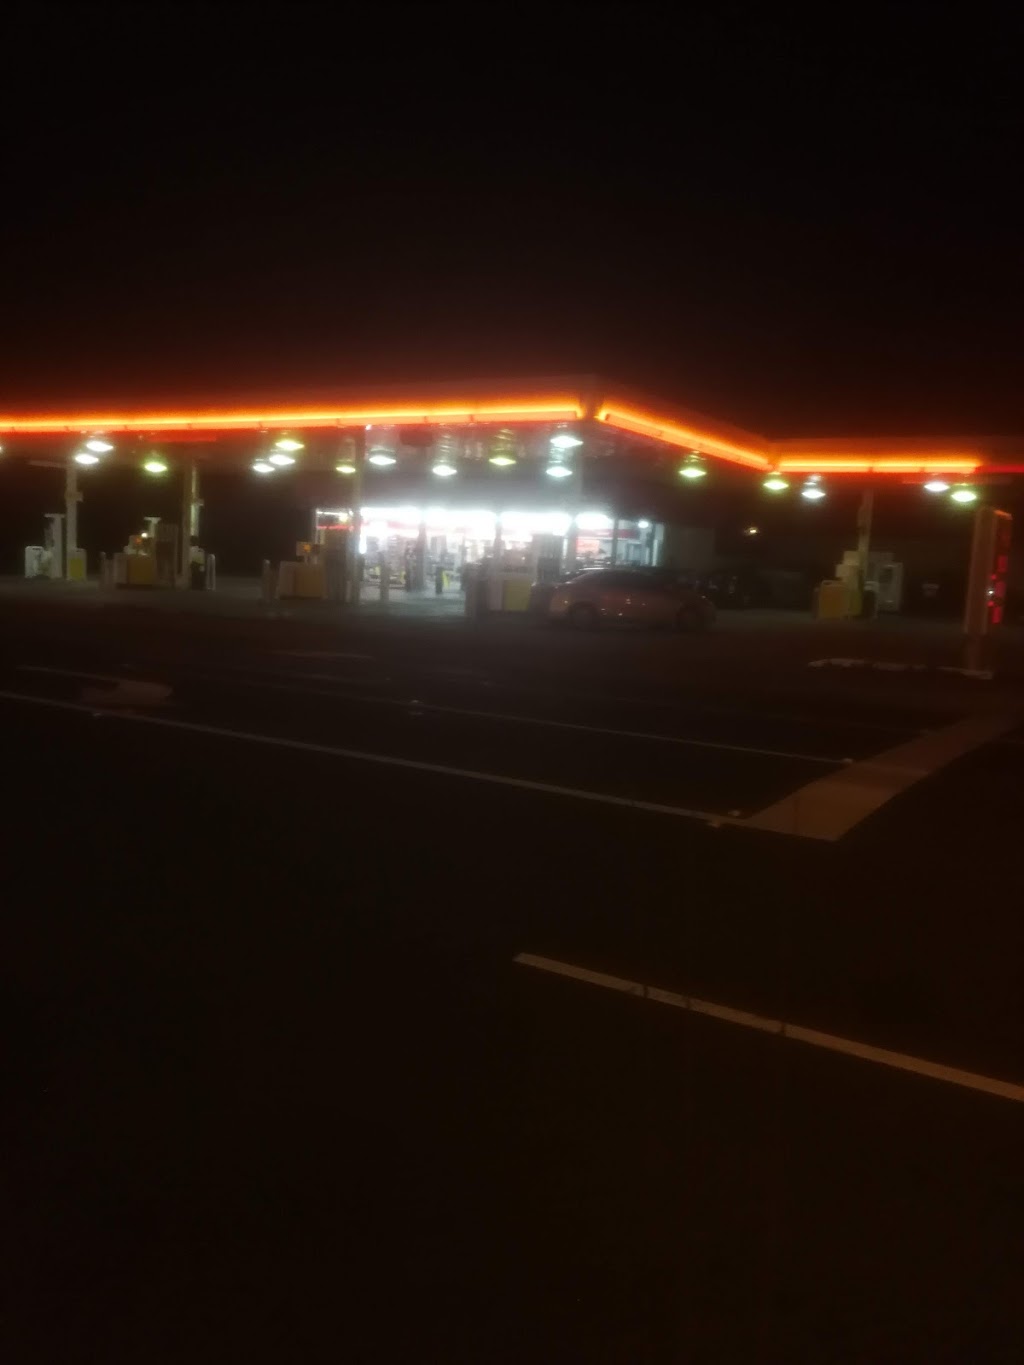 Shell | gas station | 265 Darebin Rd, Thornbury VIC 3071, Australia